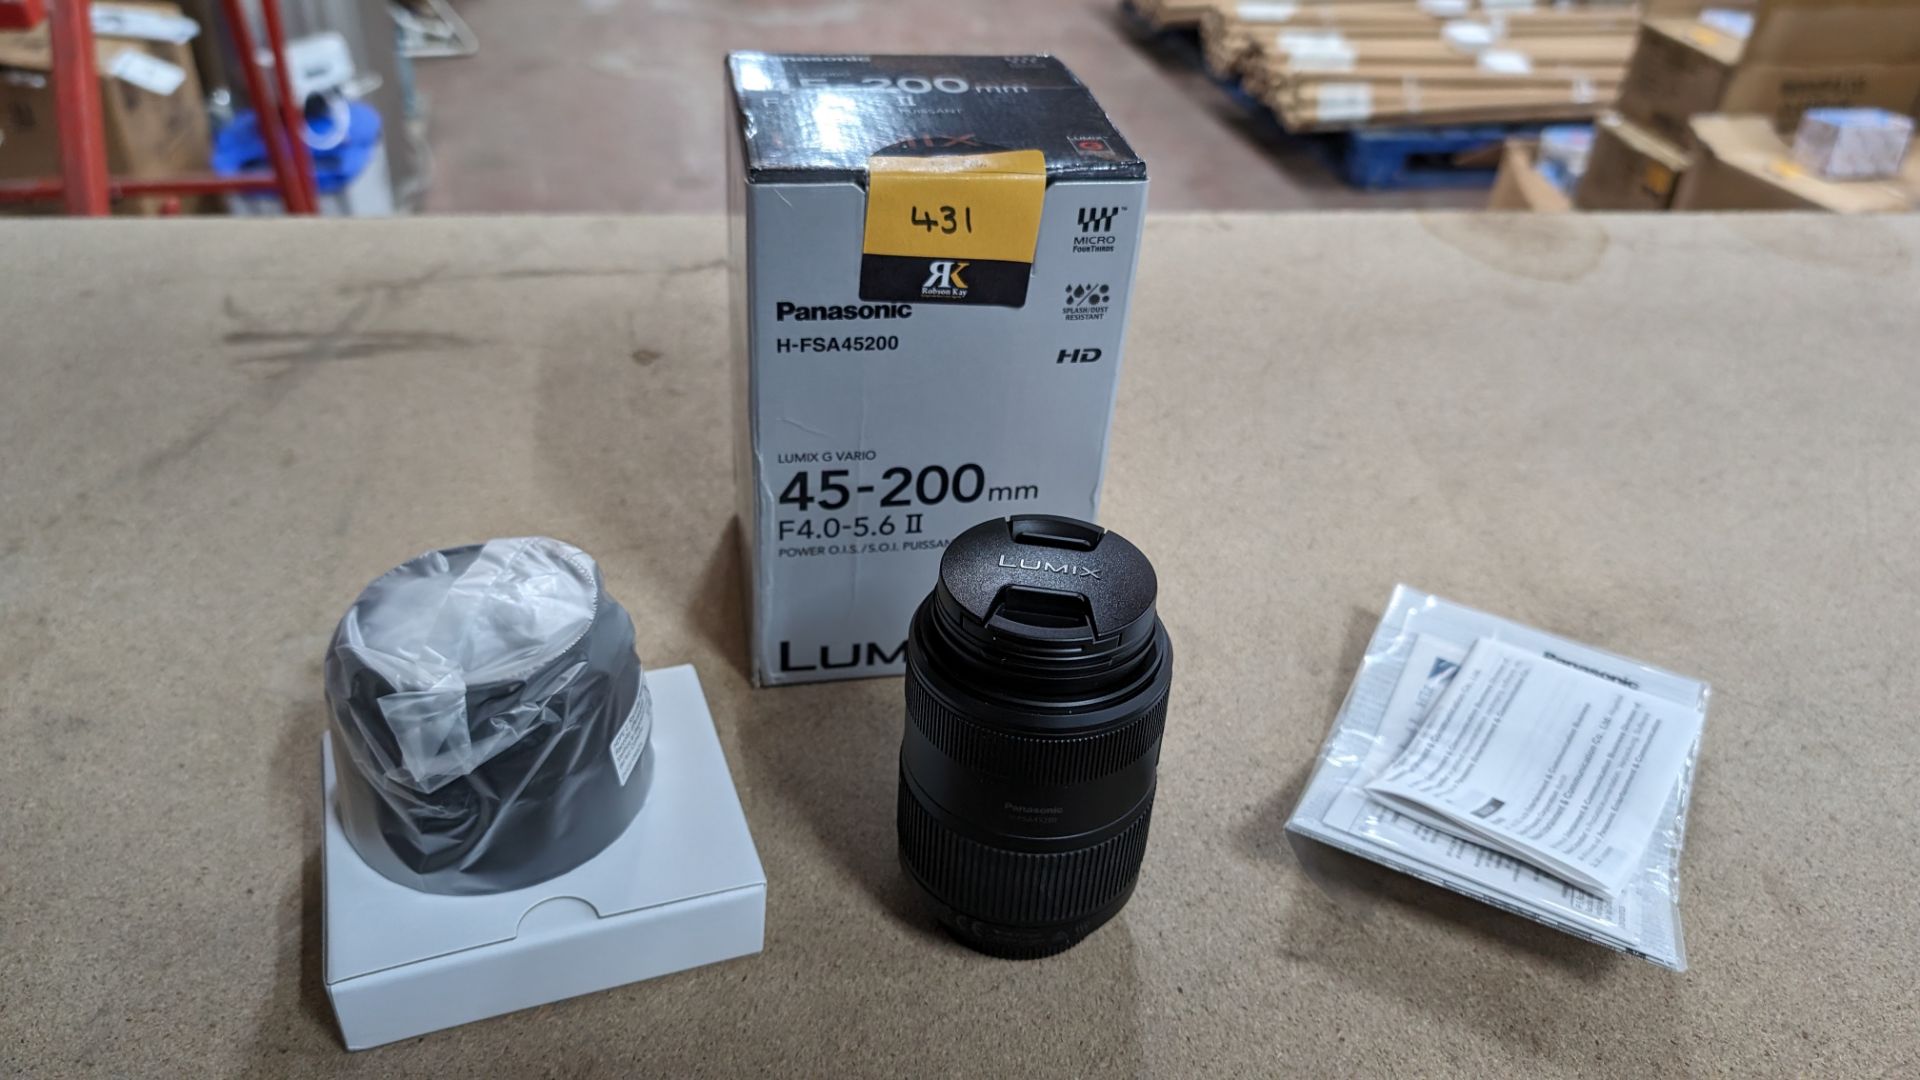 Panasonic Lumix G Vario 45-200mm lens, model H-FSA45200, f4.0-5.6 II - Image 4 of 10